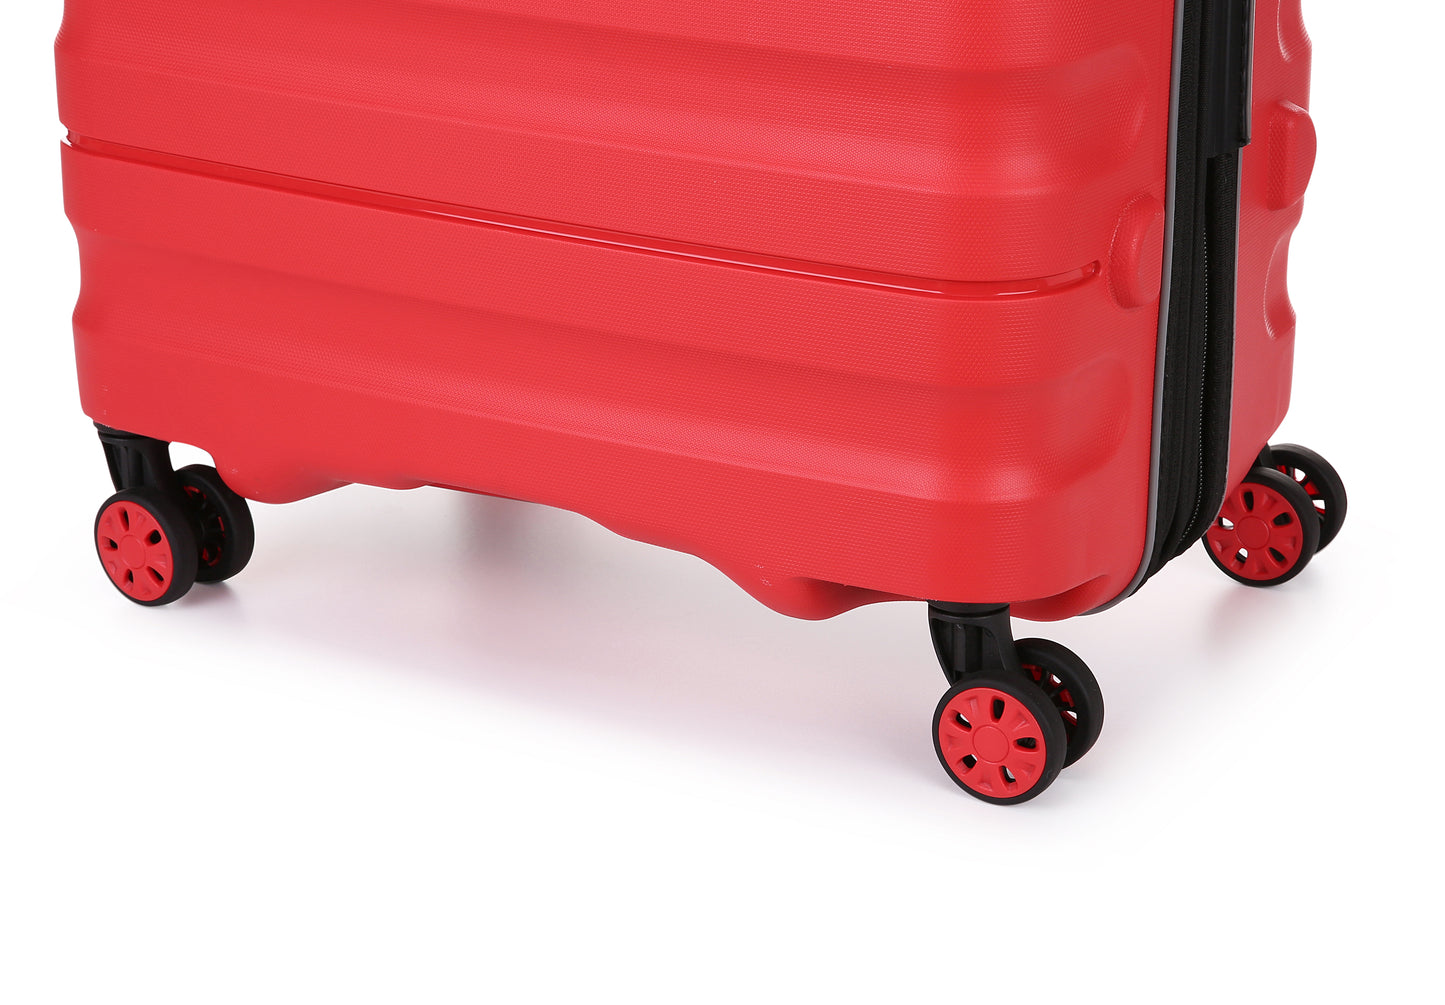 Antler – Lincoln Large 80cm Hardside 4 Wheel Suitcase – Red